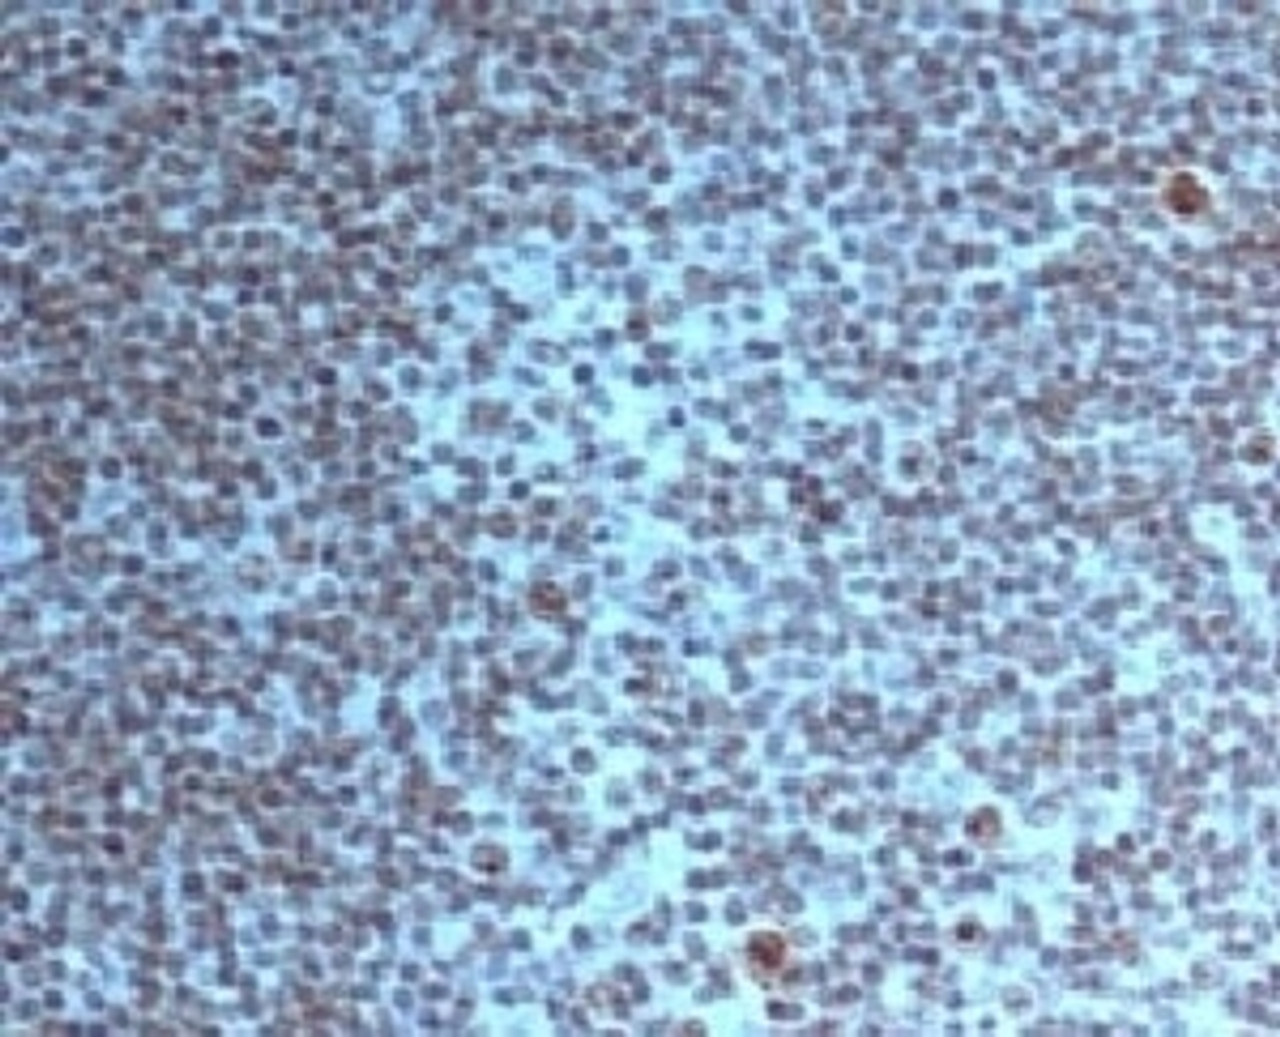 IHC staining of FFPE human tonsil tissue with Nucleoli marker antibody.